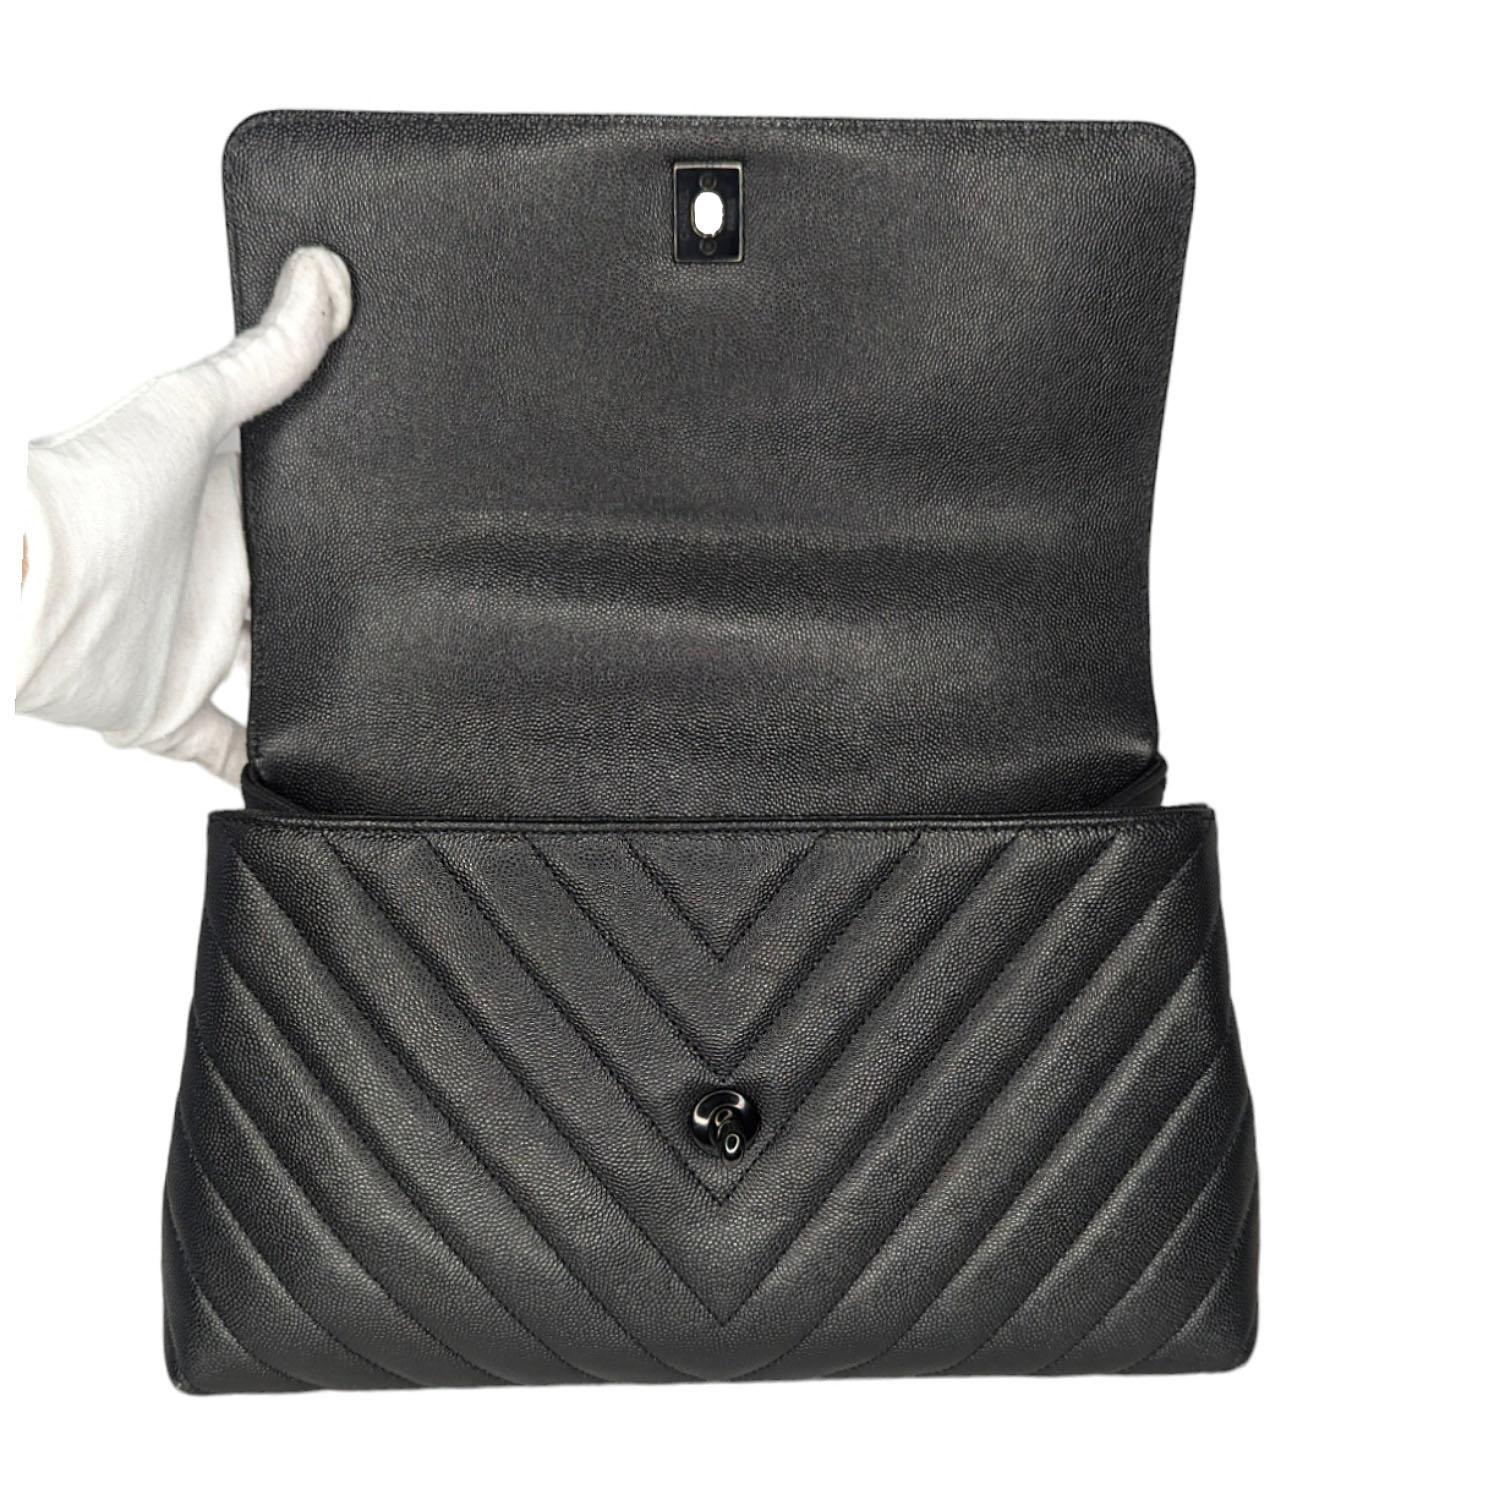 Chanel Medium Chevron So Black Coco Handle Bag For Sale 4